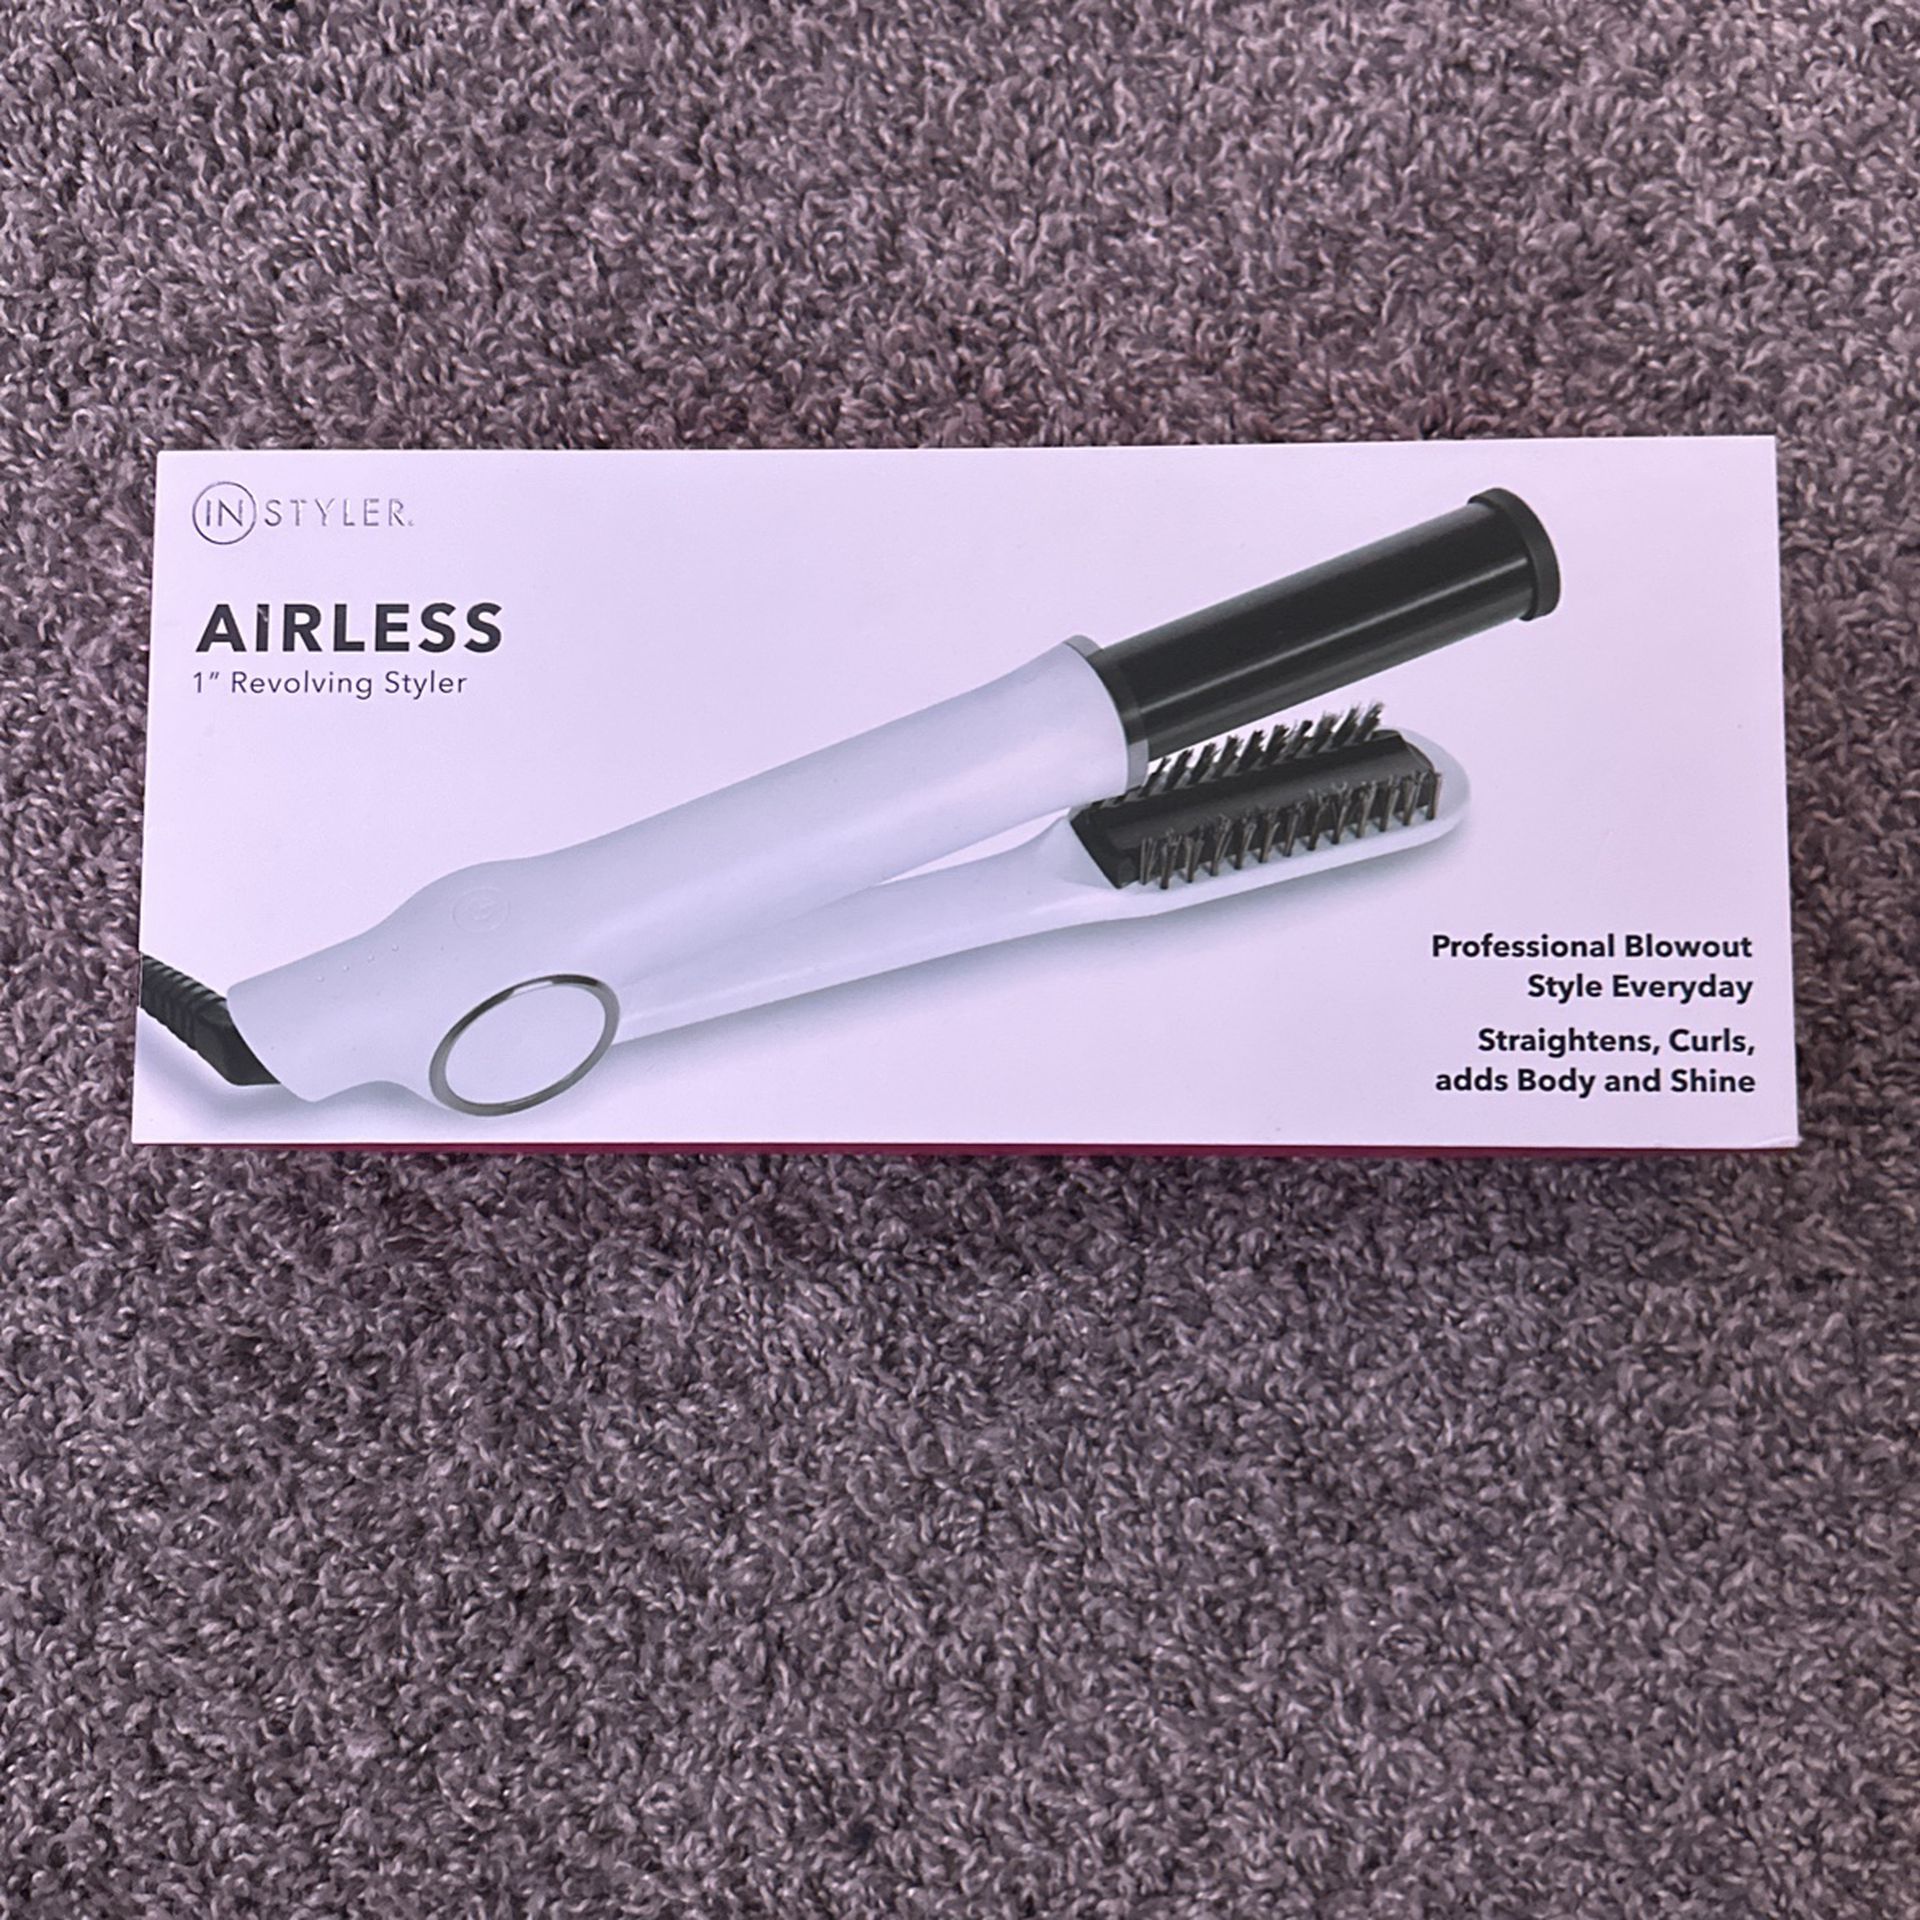 Instyle airless 1” revolving styler Hair Straightener And Curler